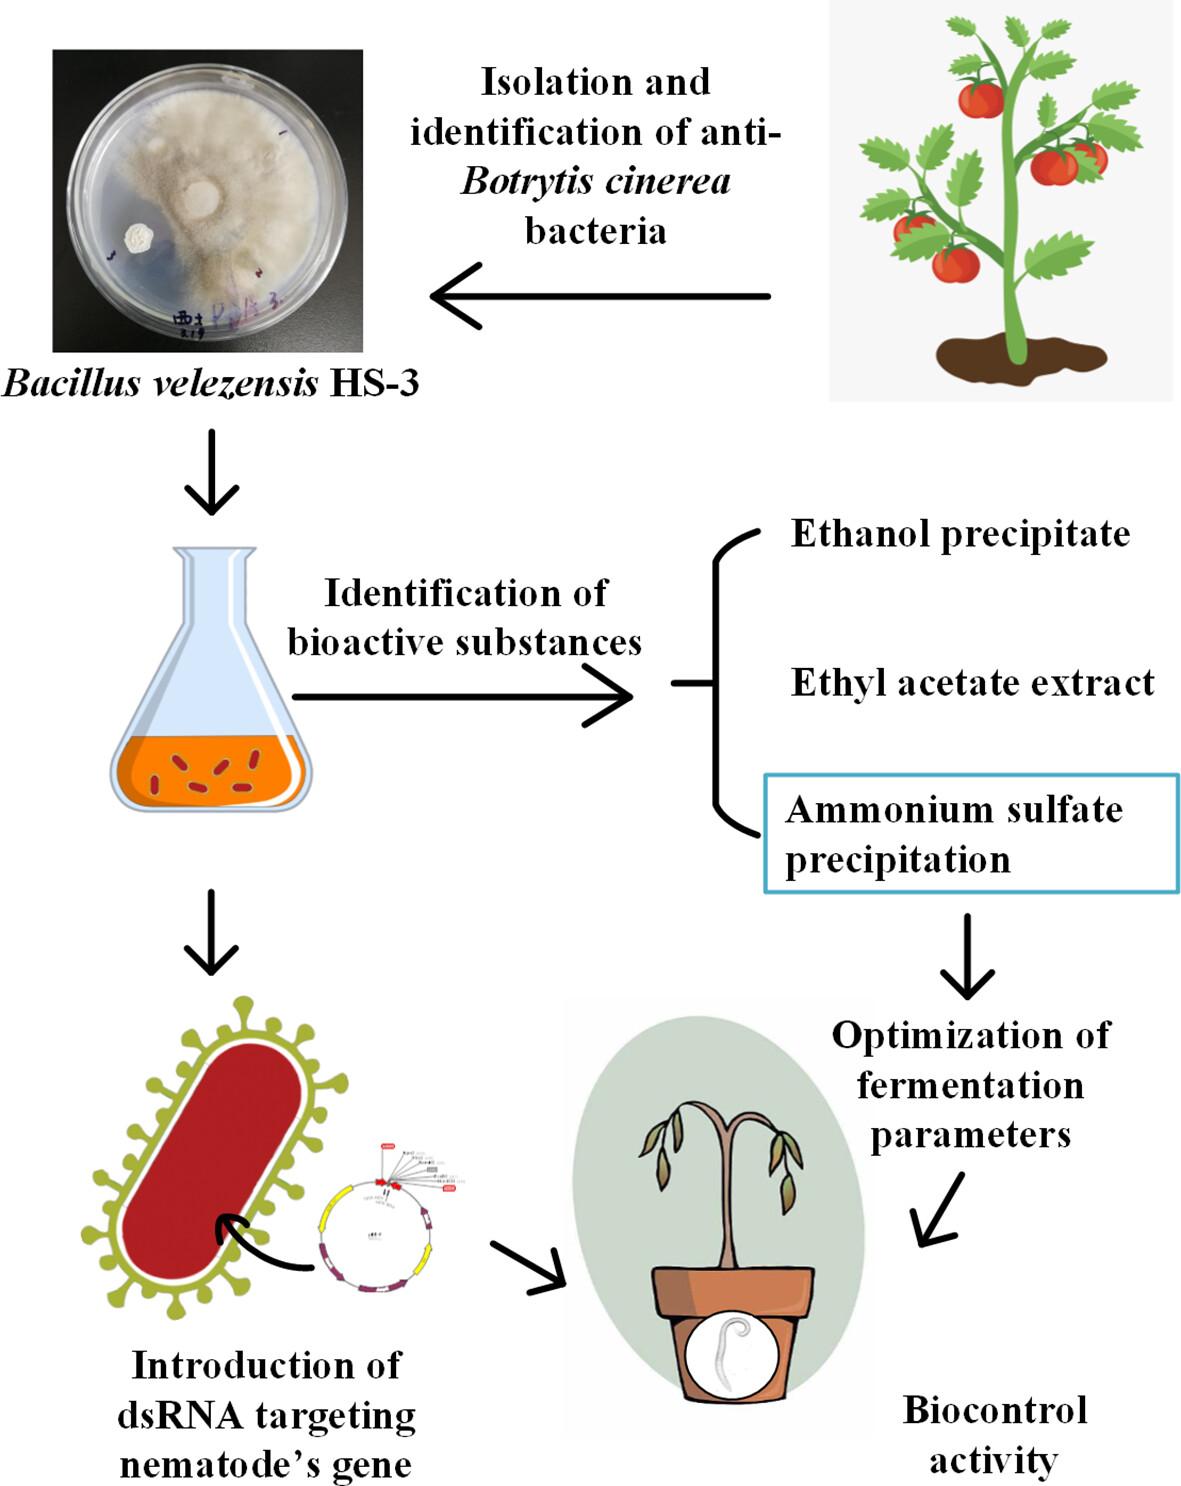 Enhancing tomato disease resistance through endogenous antifungal proteins and introduced nematode-targeting dsRNA of biocontrol agent Bacillus velezensis HS-3